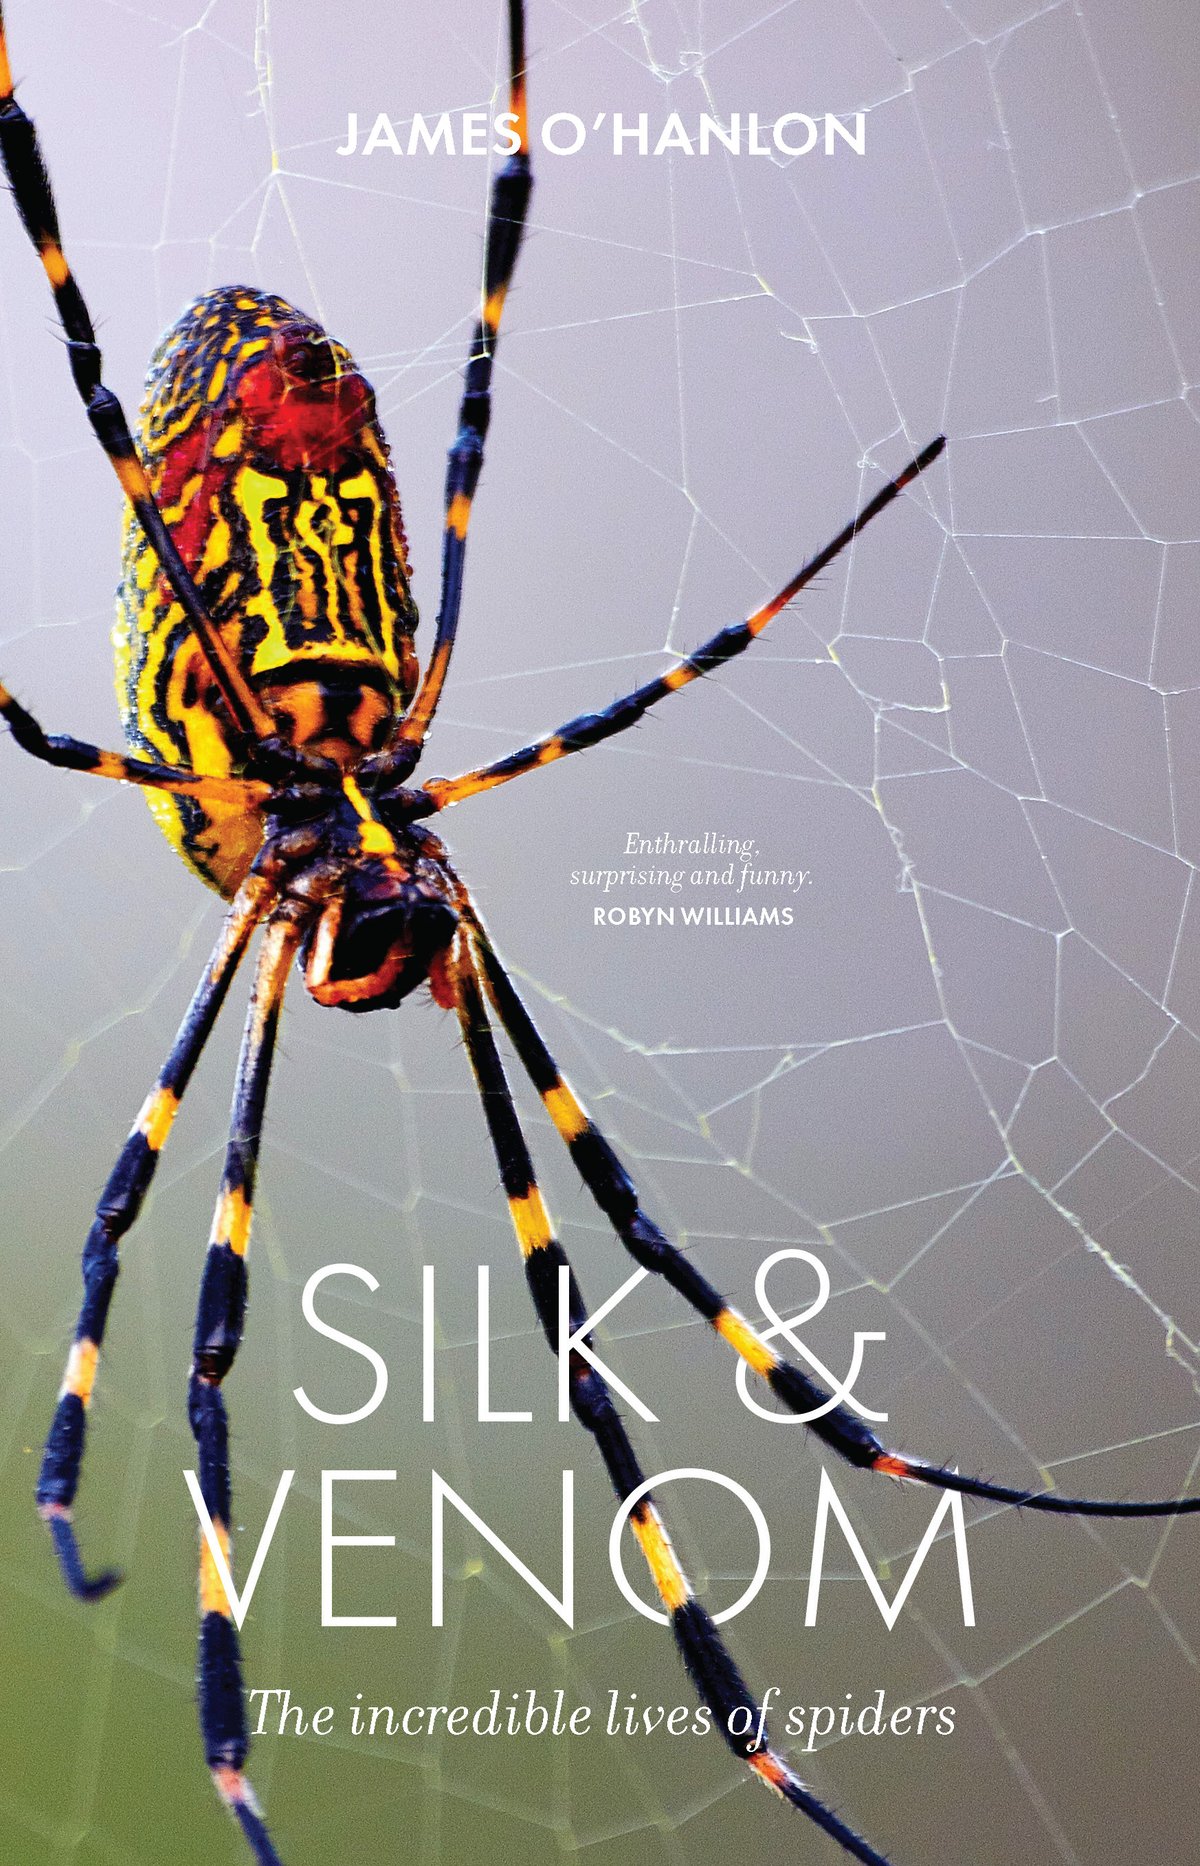 Silk & Venom